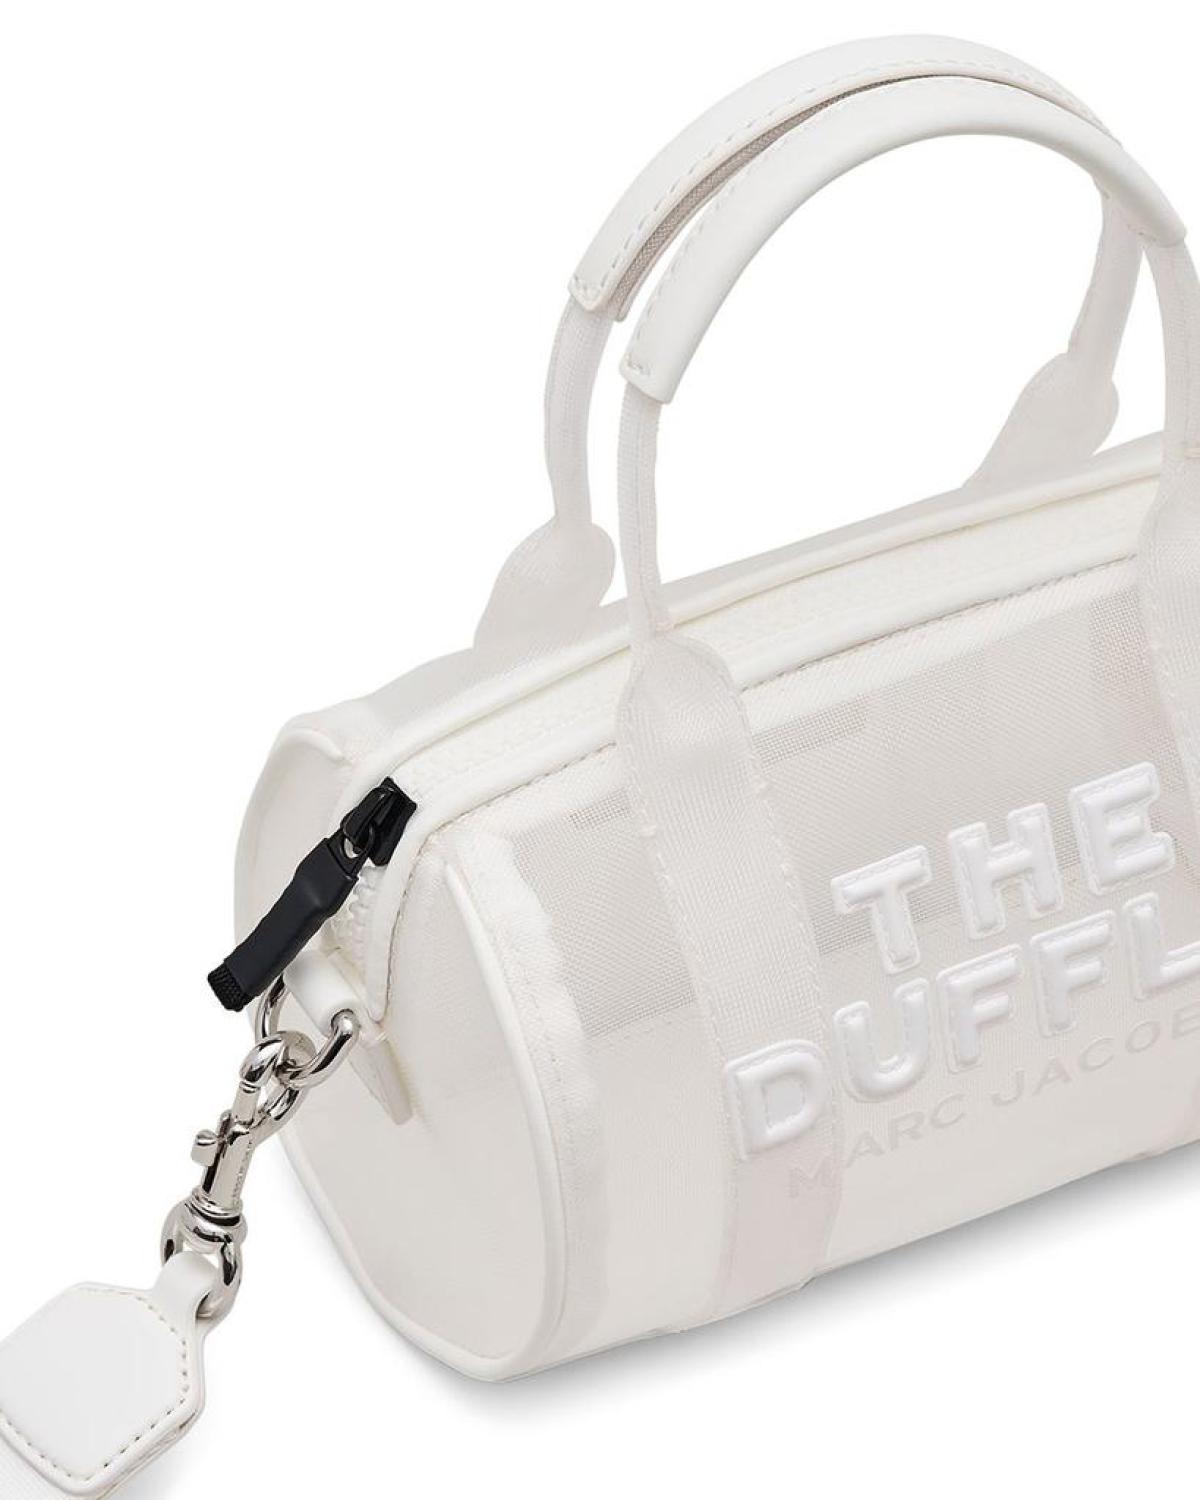 The Duffle Mesh Mini Duffle Bag